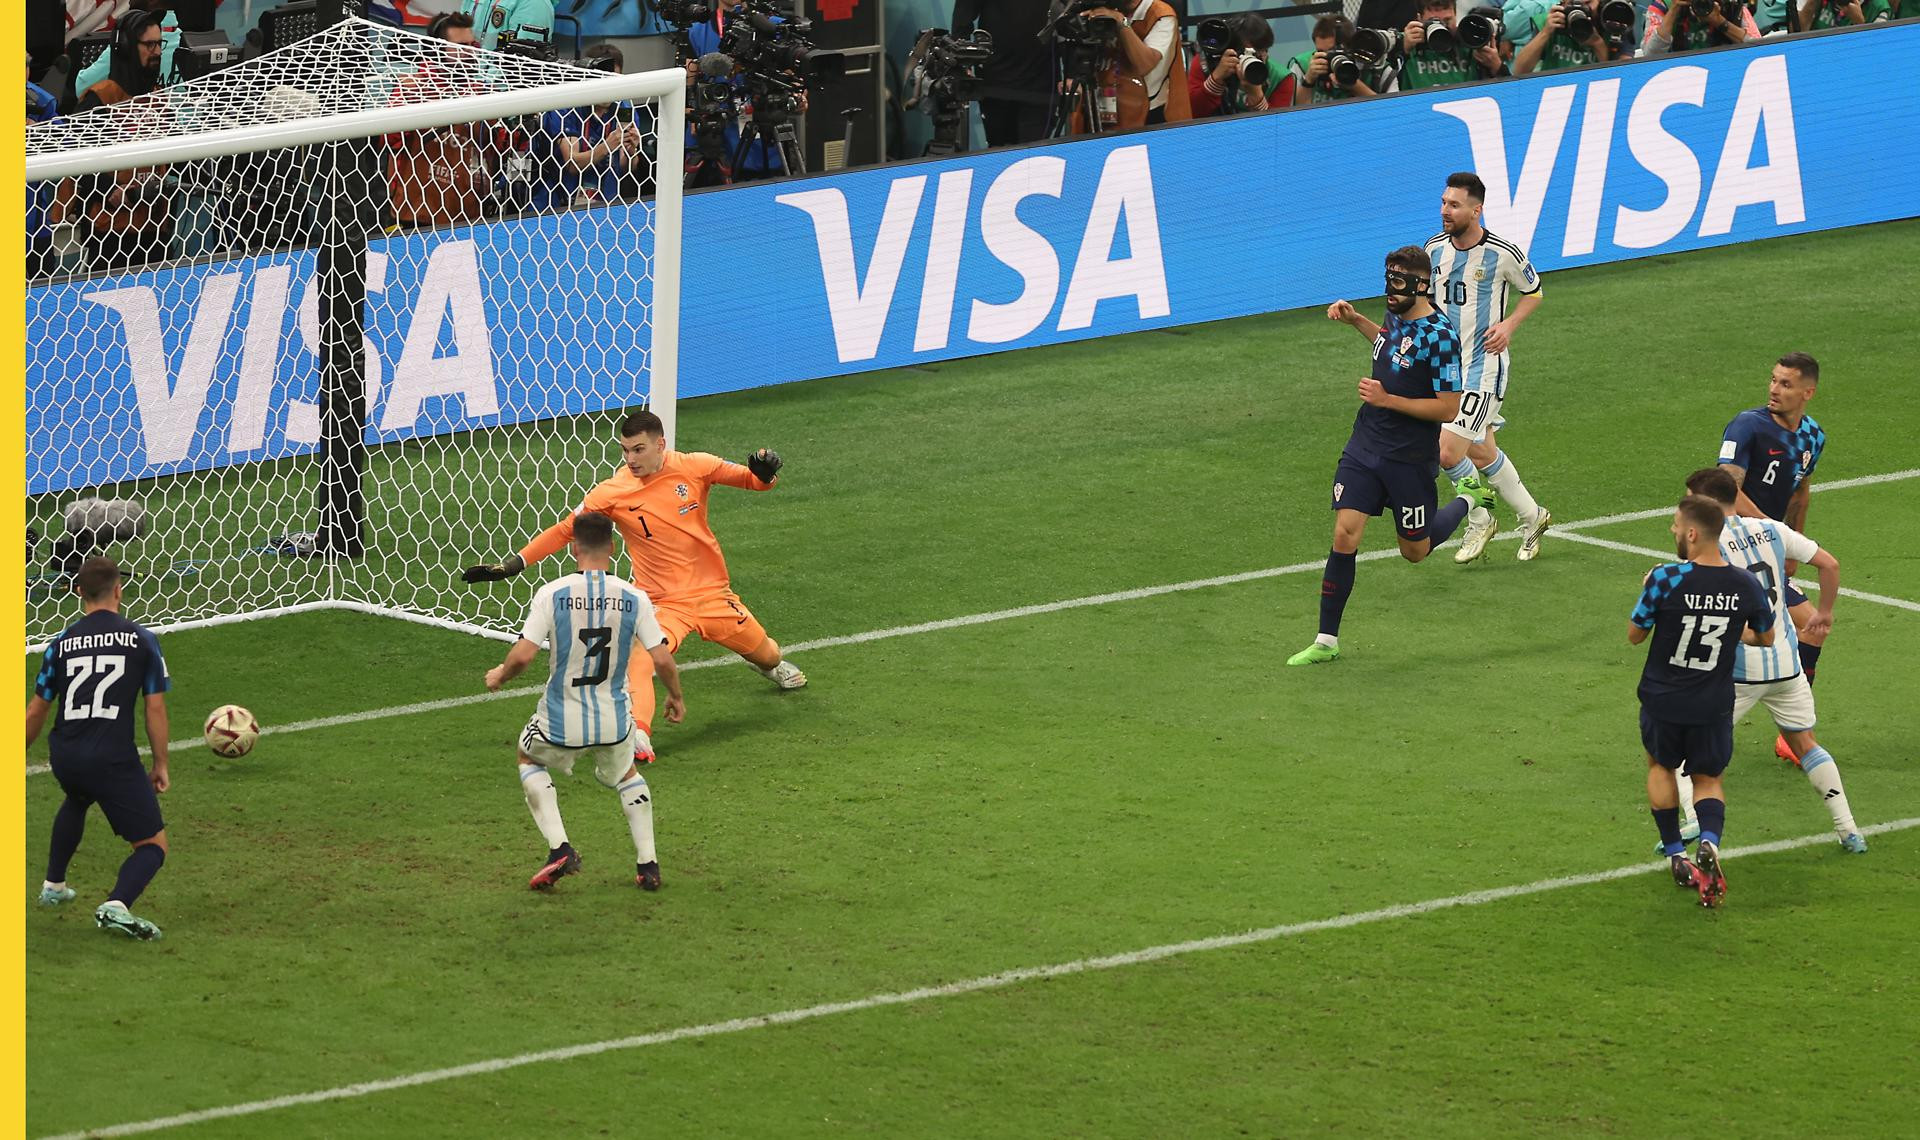 El delantero Julián Álvarez marca el tercer gol de Argentina ante Croacia, a pase de Messi